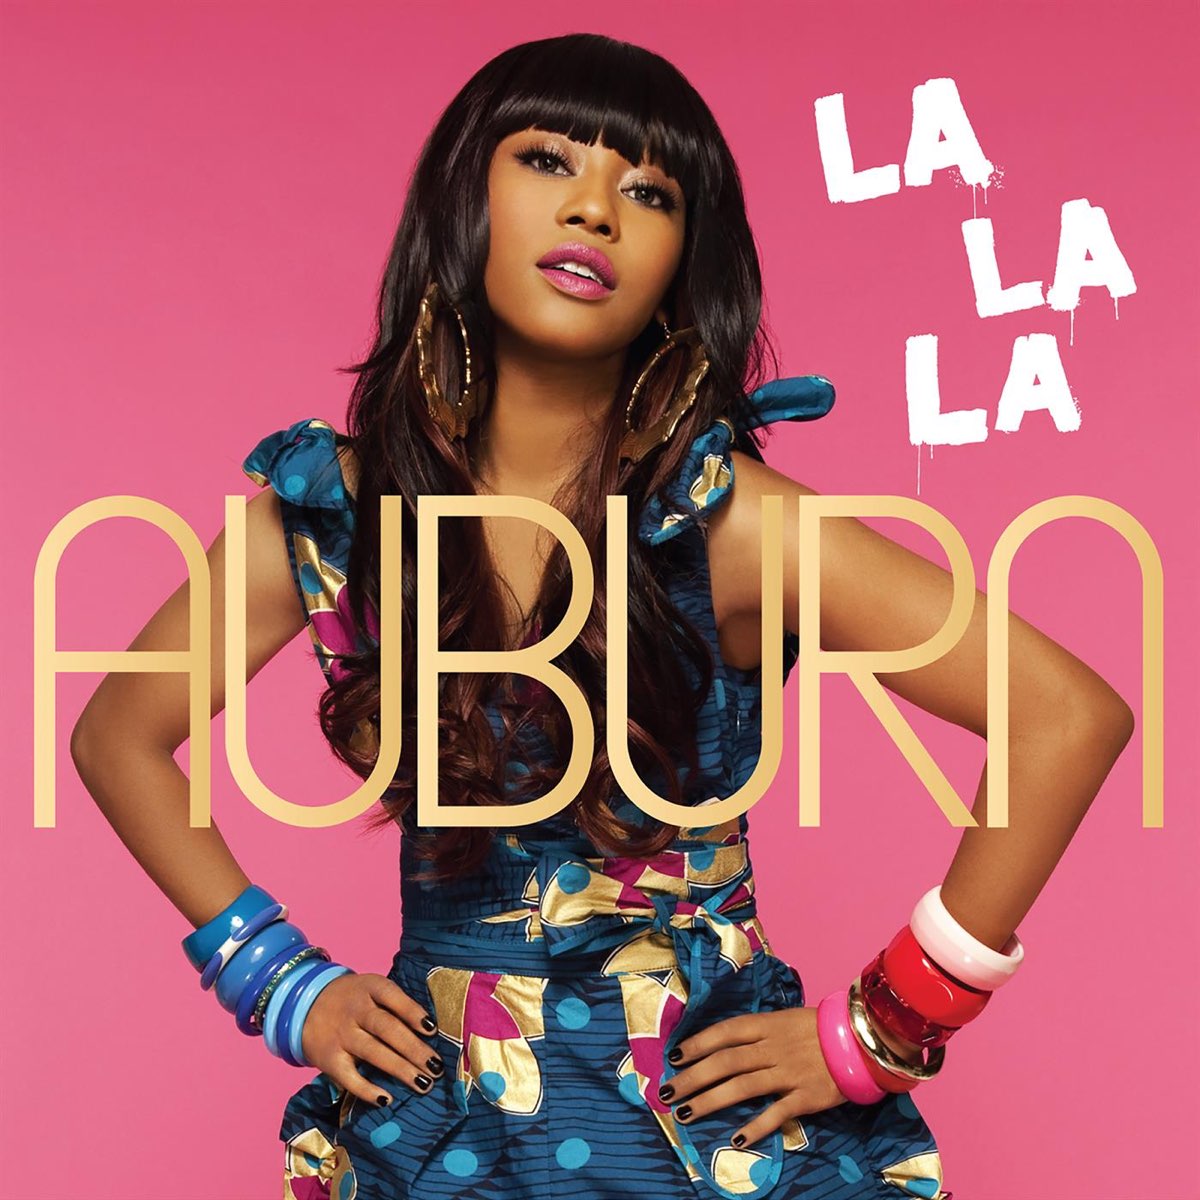 Auburn featuring Iyaz — La, La, La cover artwork